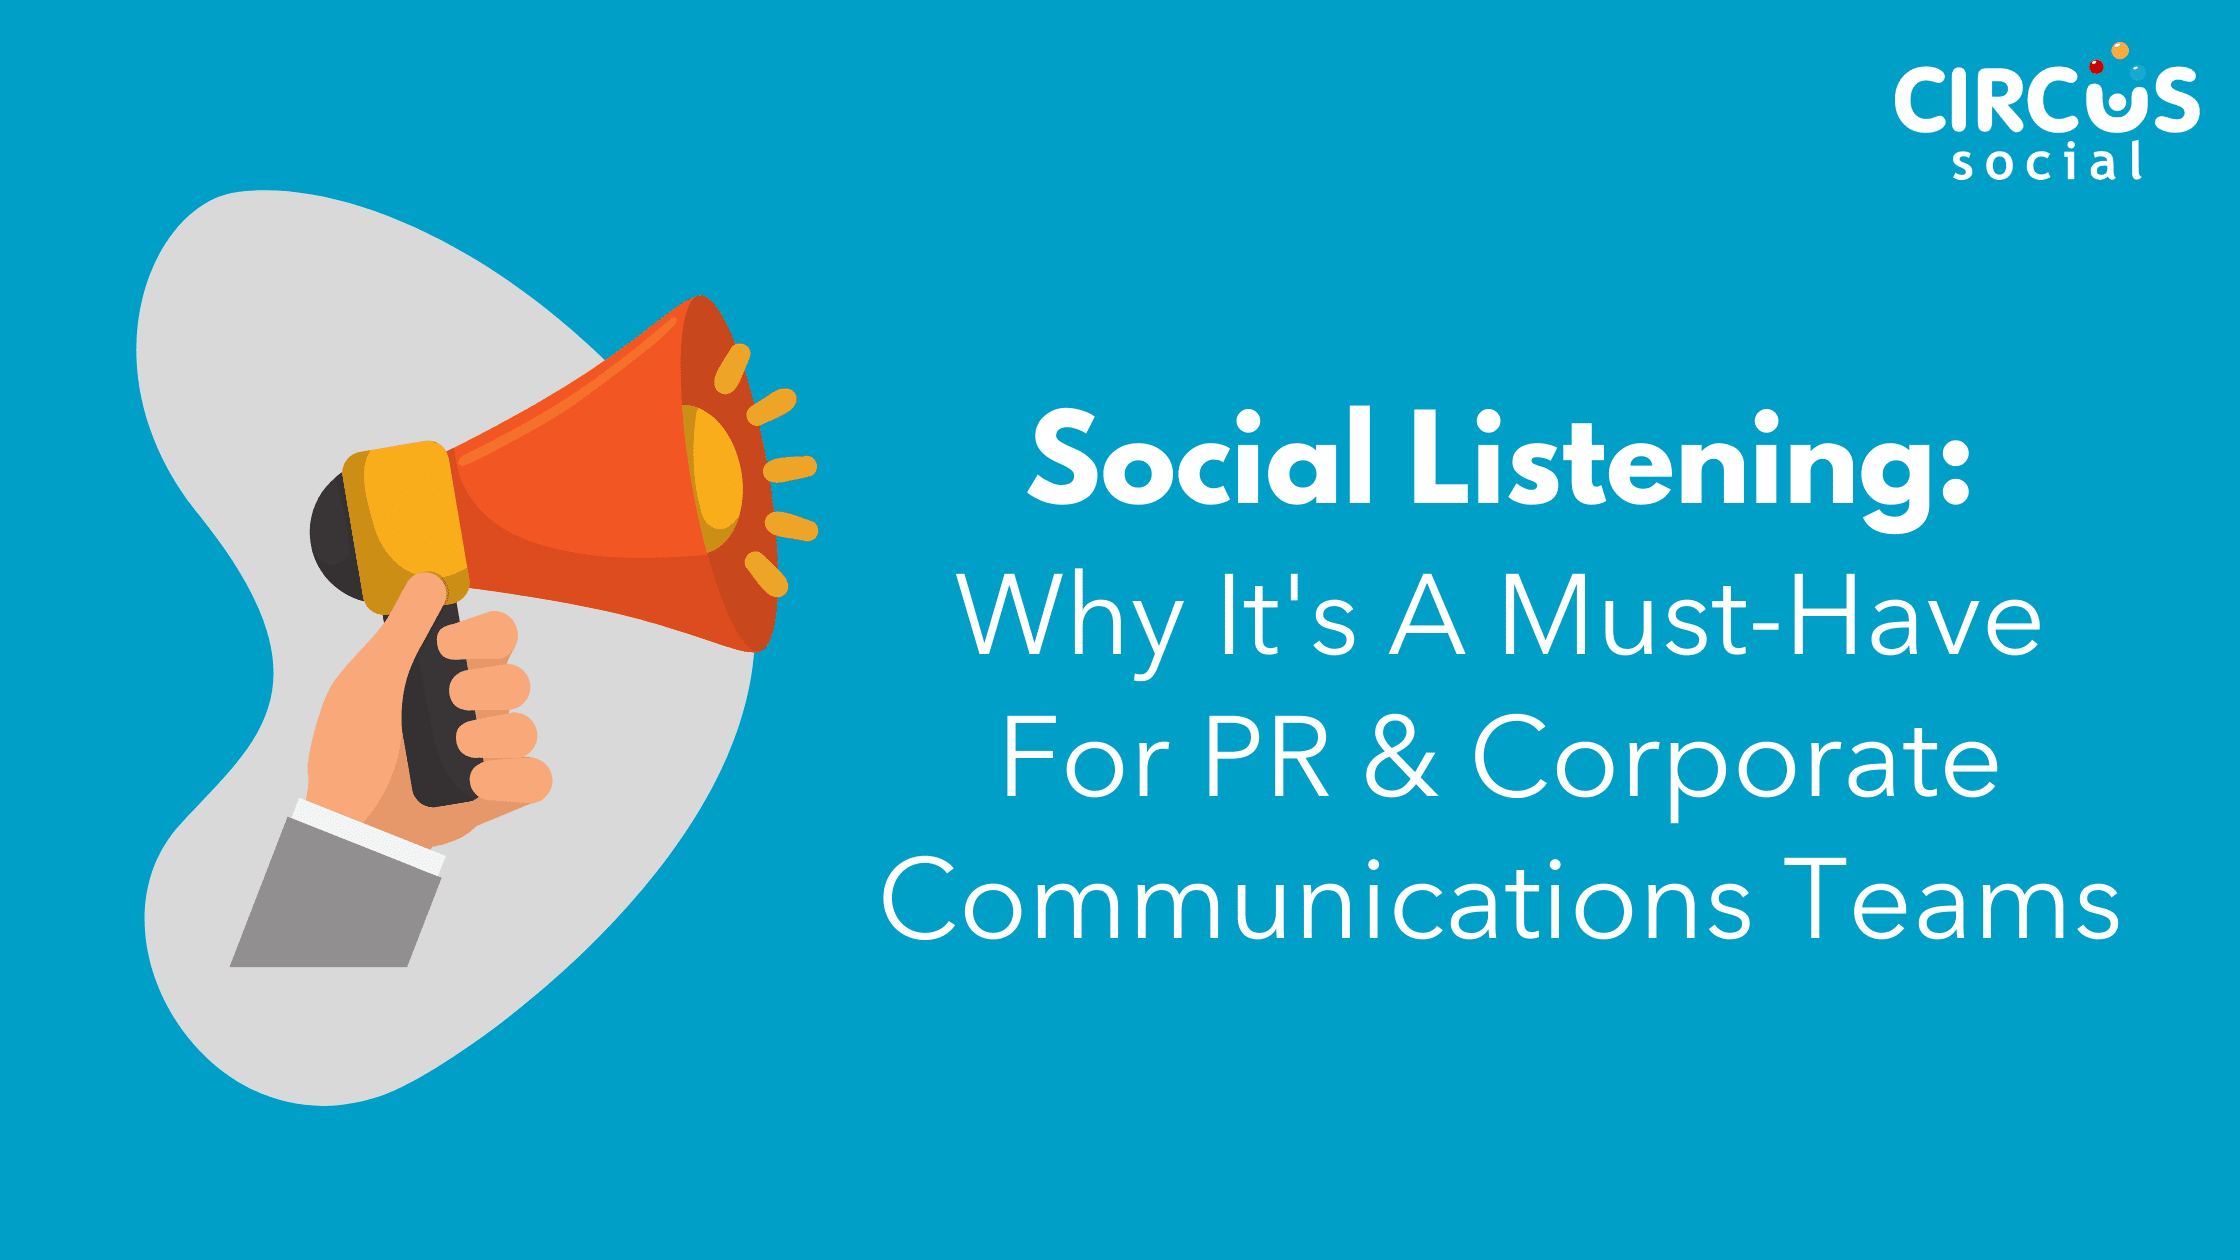 Blog Post: Social Listening For PR & Communications